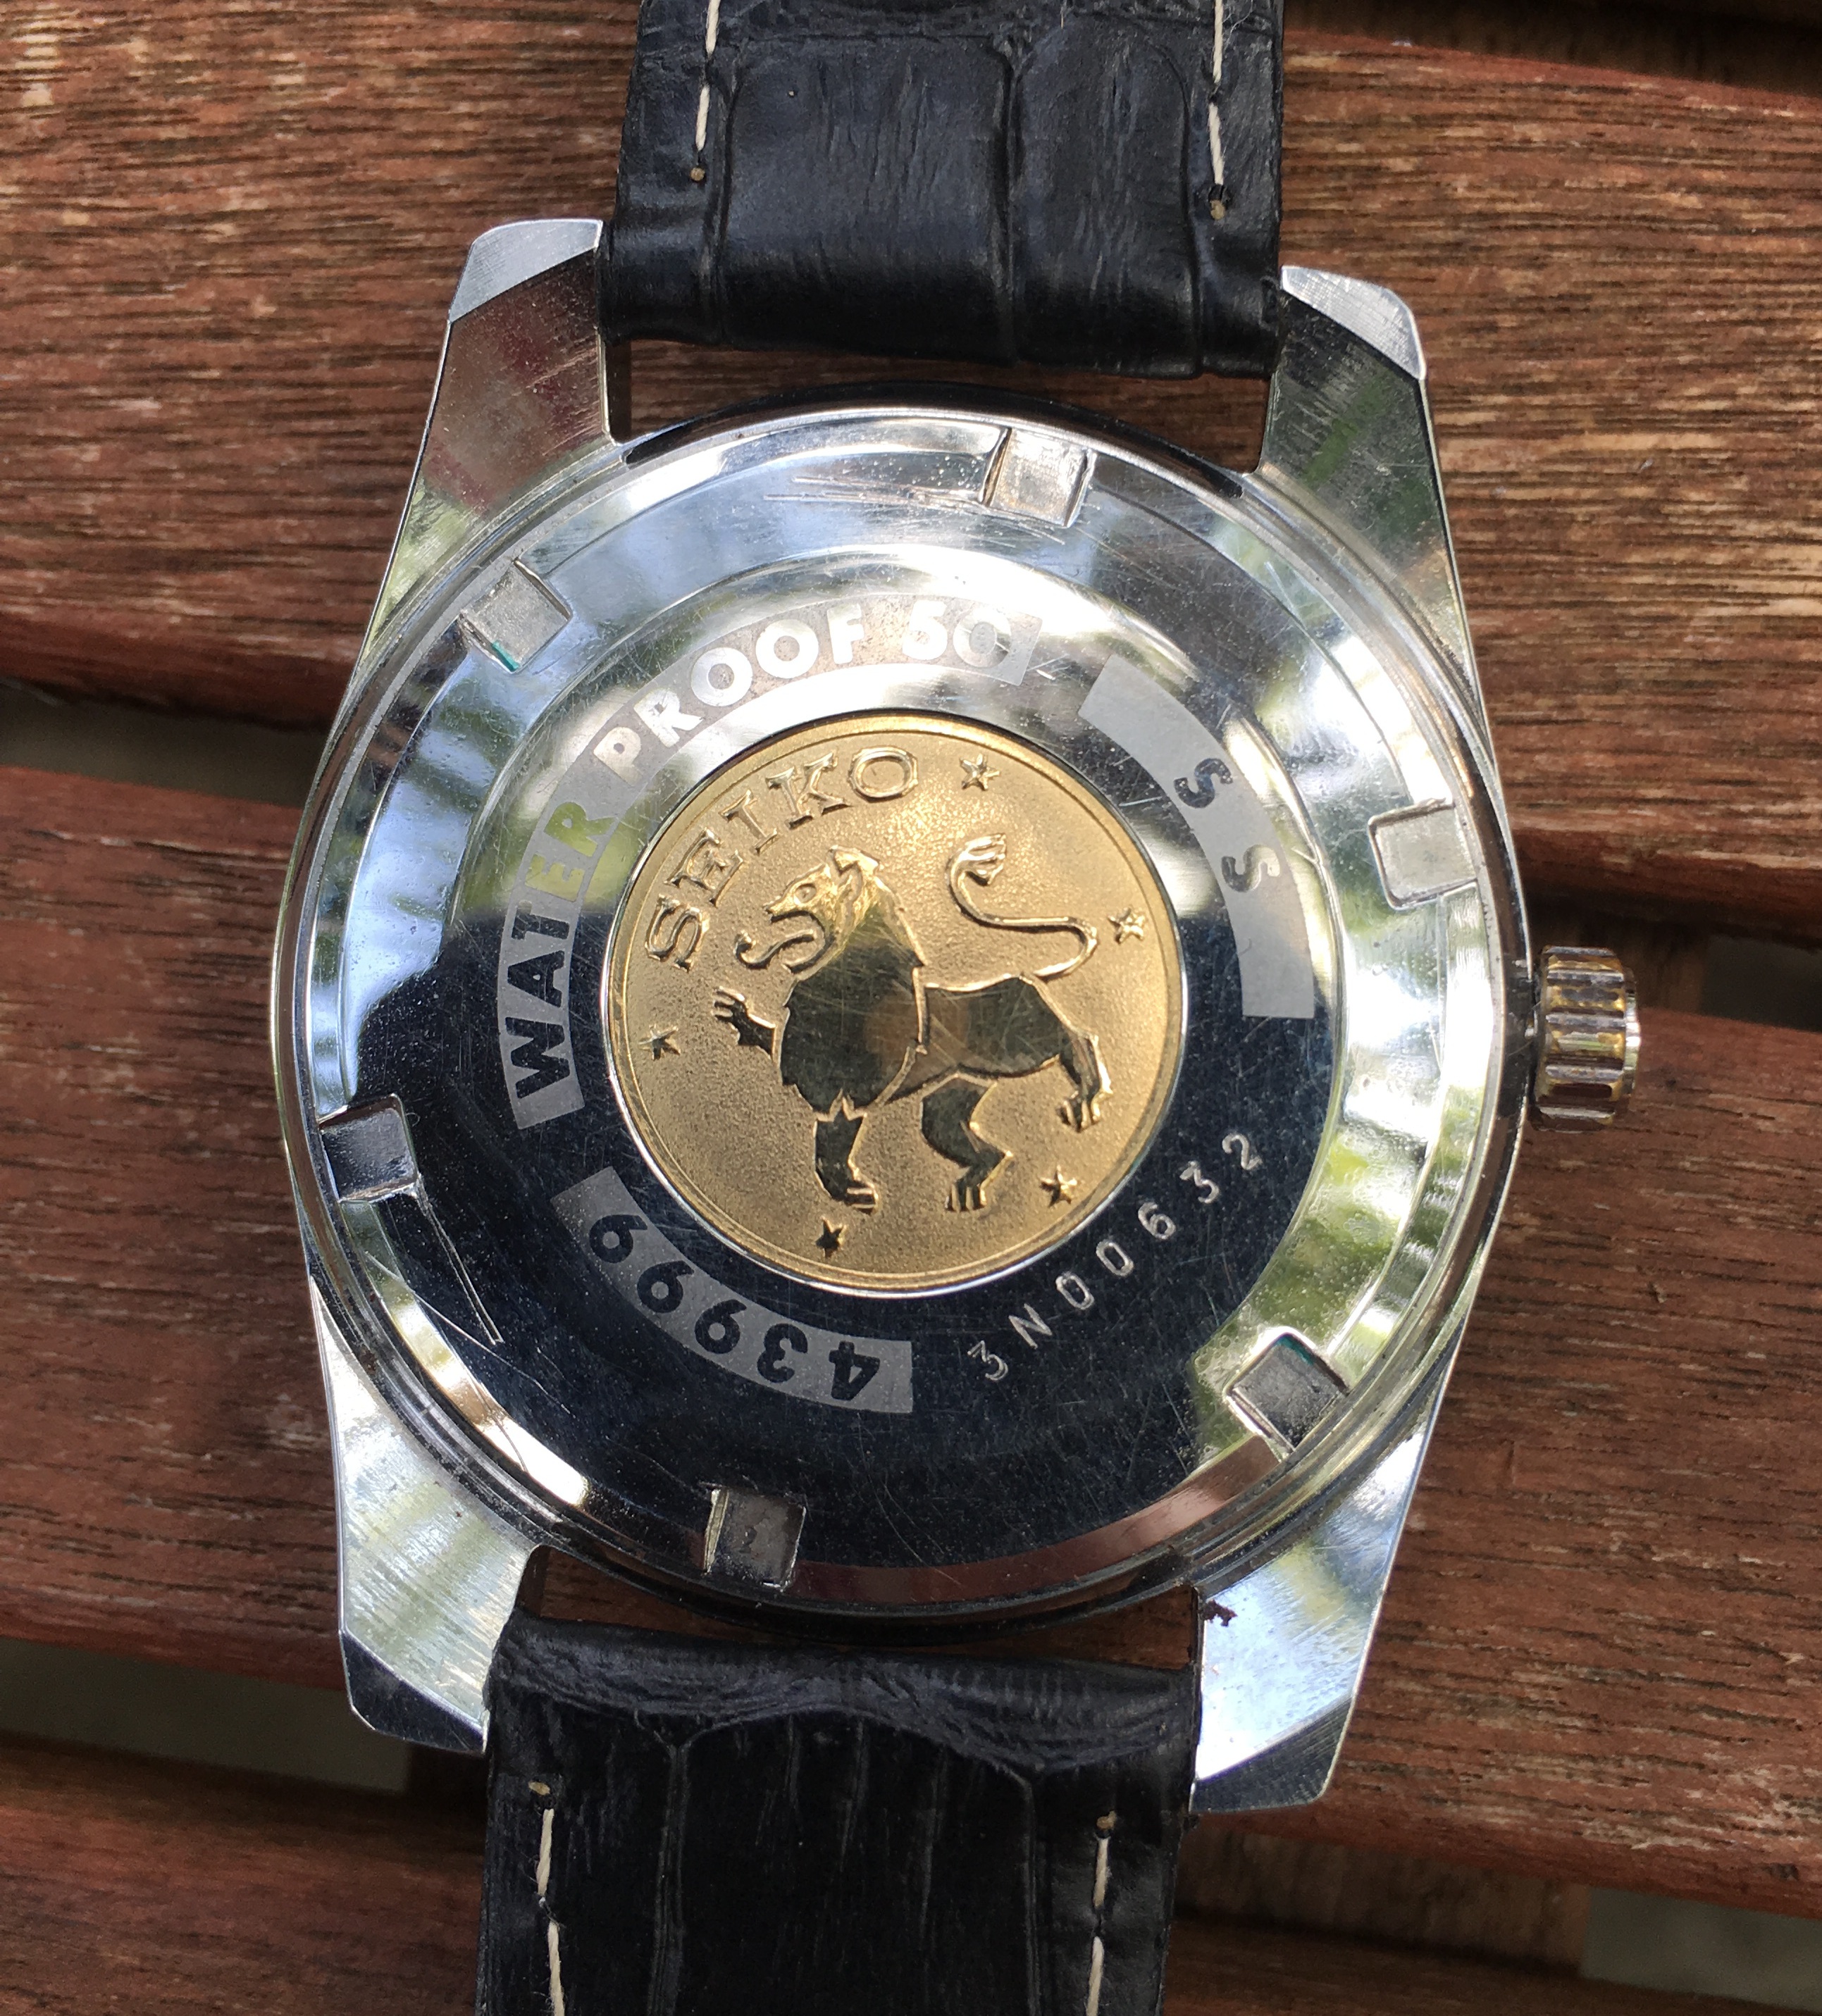 SOLD - 1963 Grand Seiko 43999 Chronometer | Omega Forums